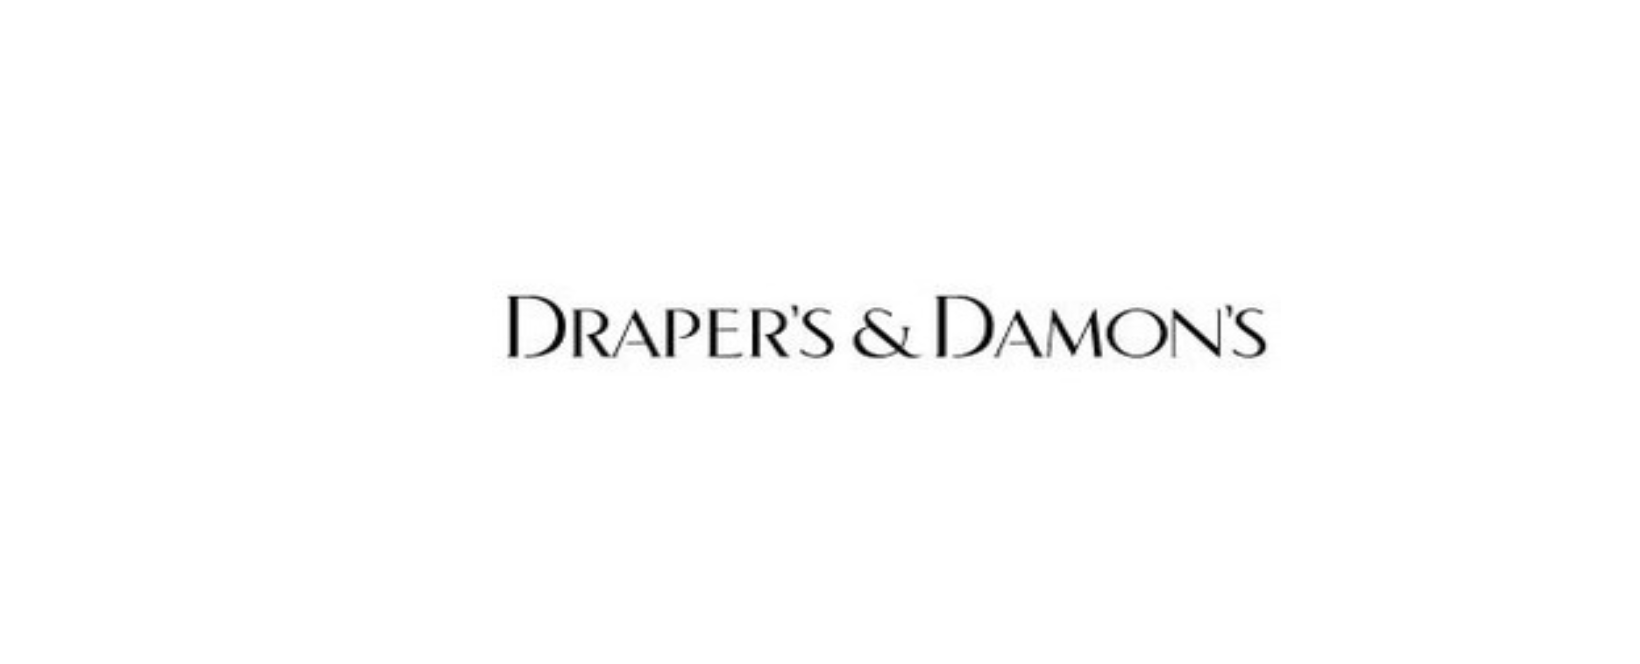 Draper's & Damon's Discount Code 2022